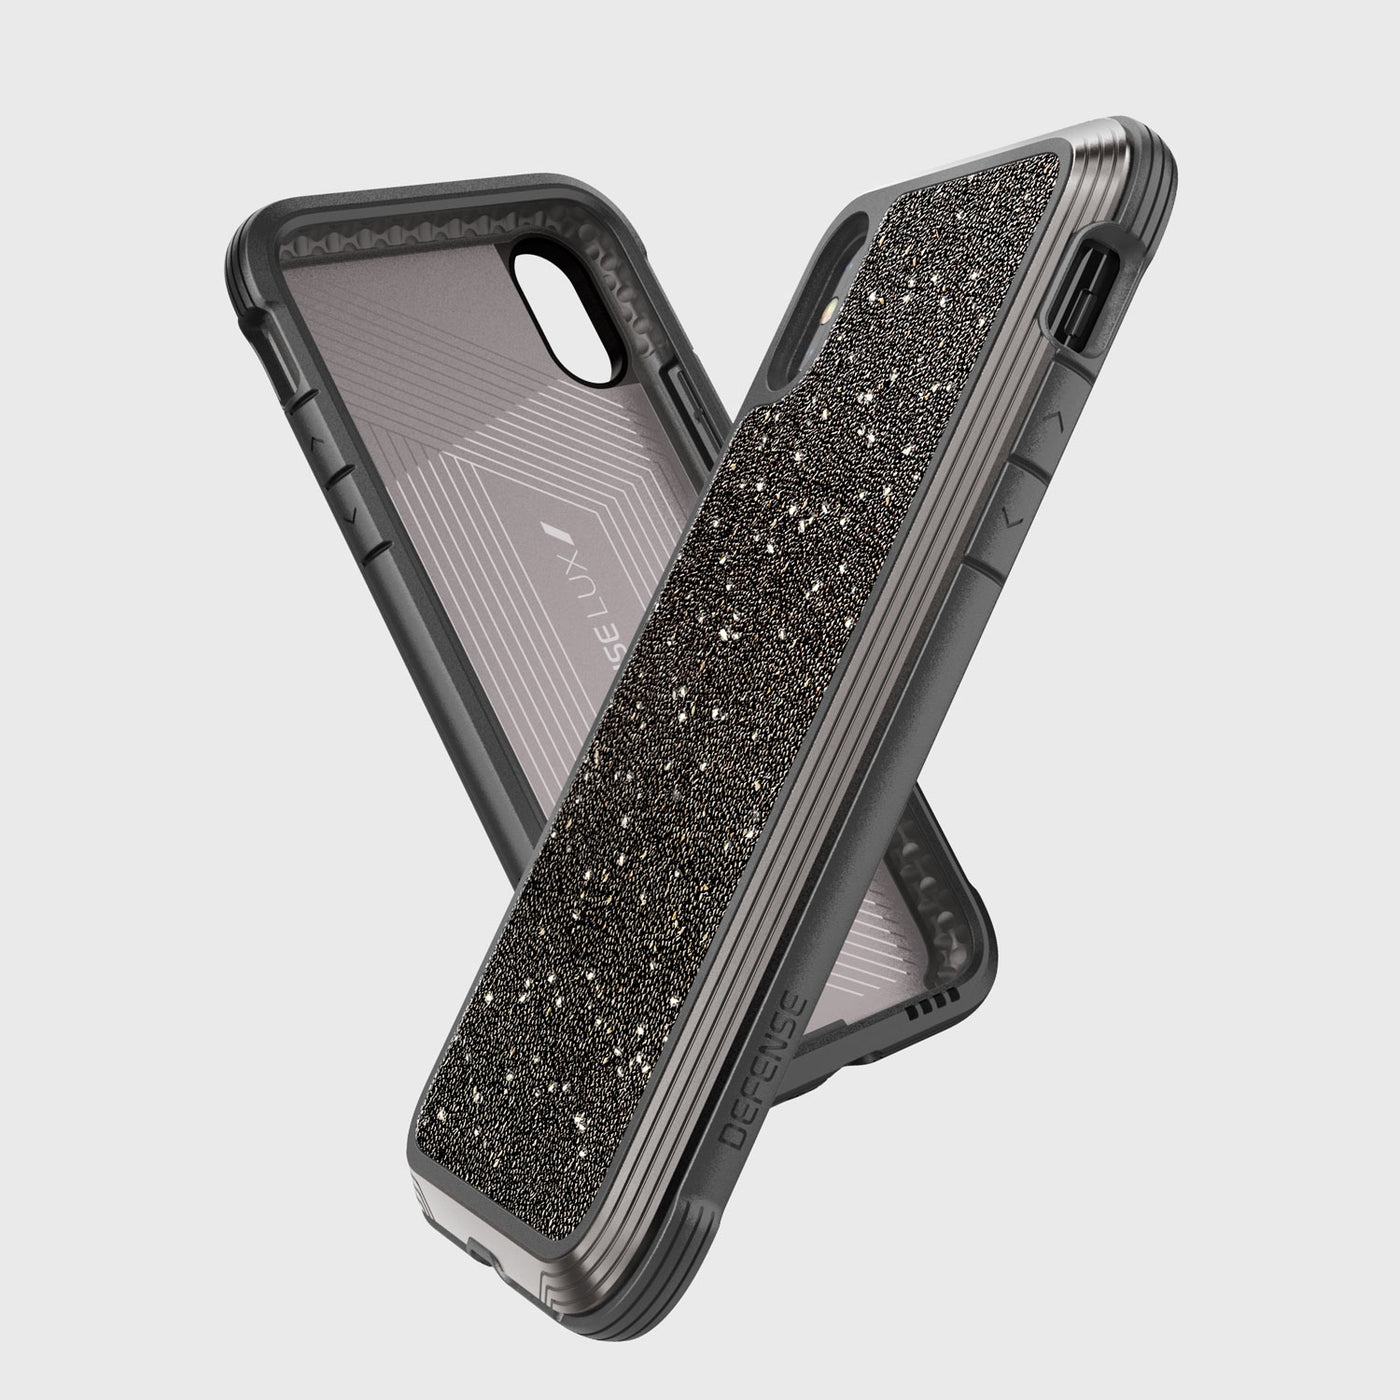 Luxurious Case for iPhone X. Raptic Lux in dark glitter.